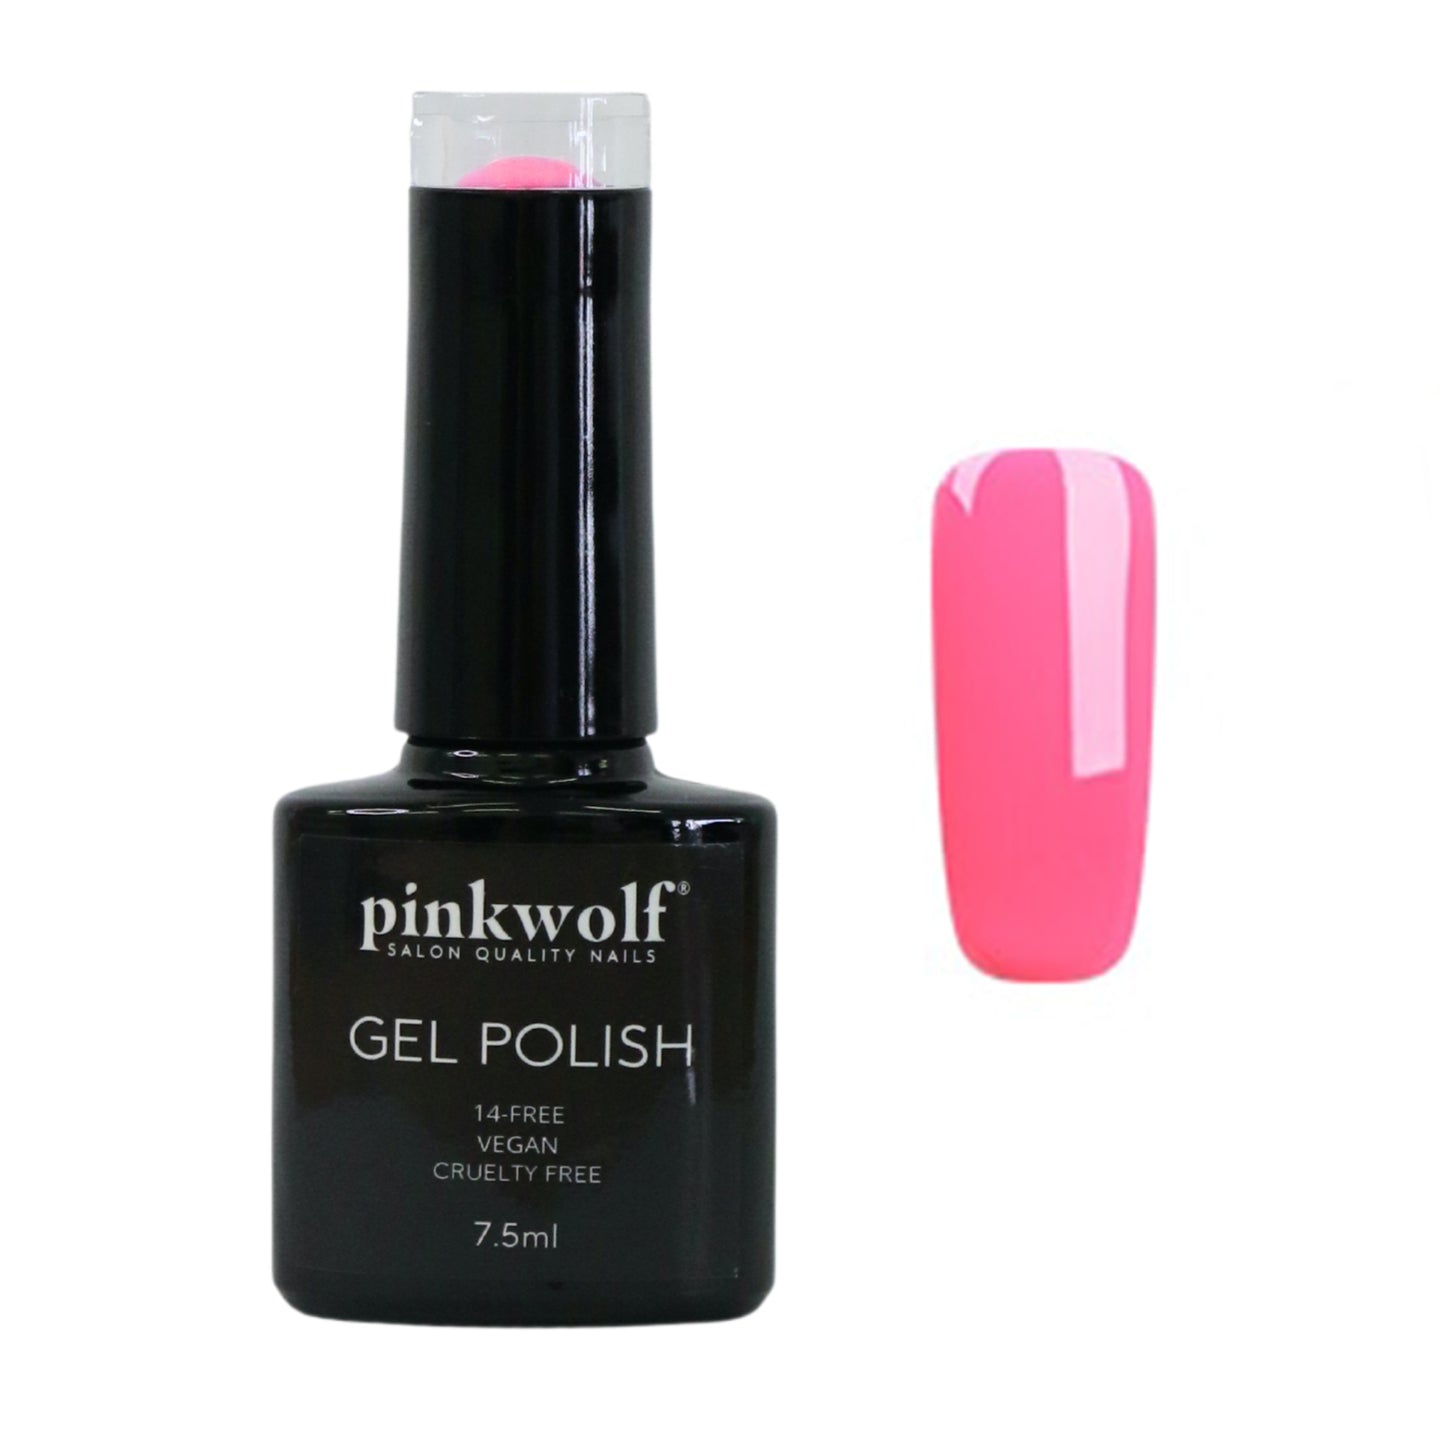 Pinkwolf gel nail polish 7.5ml bottle